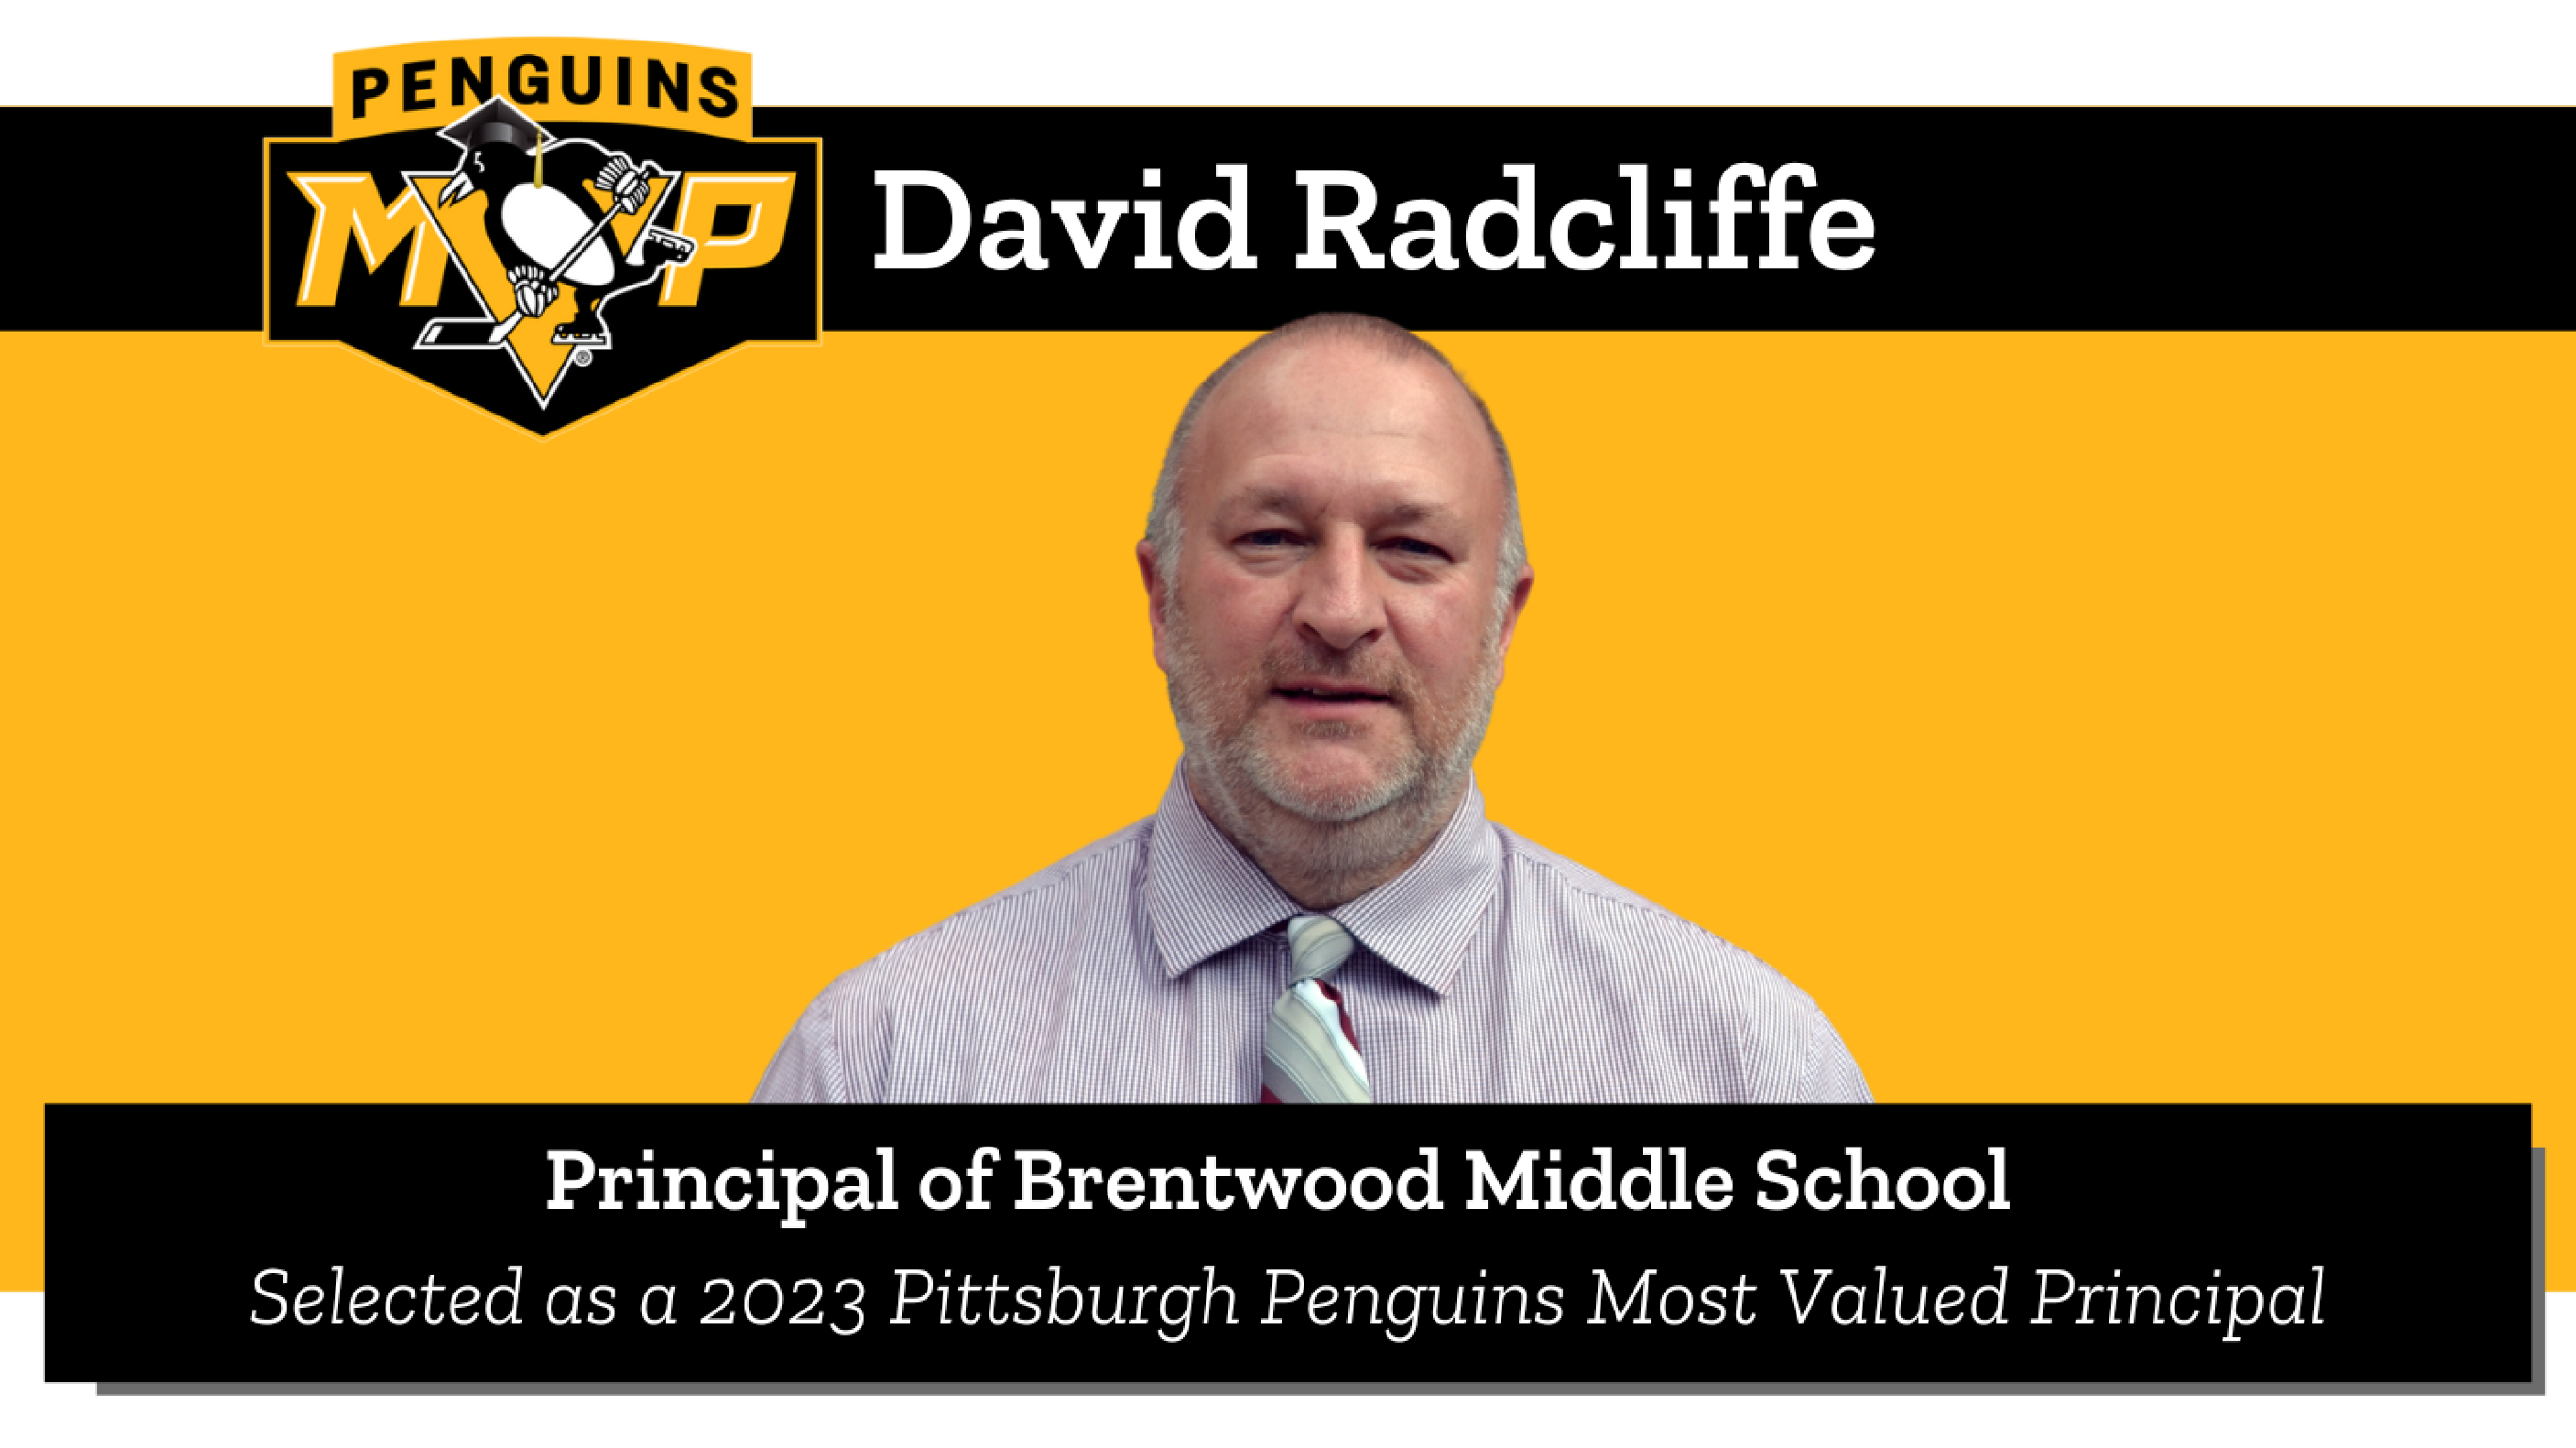 Penguins MVP David Radcliffe, Principal of Brentwood Middle School